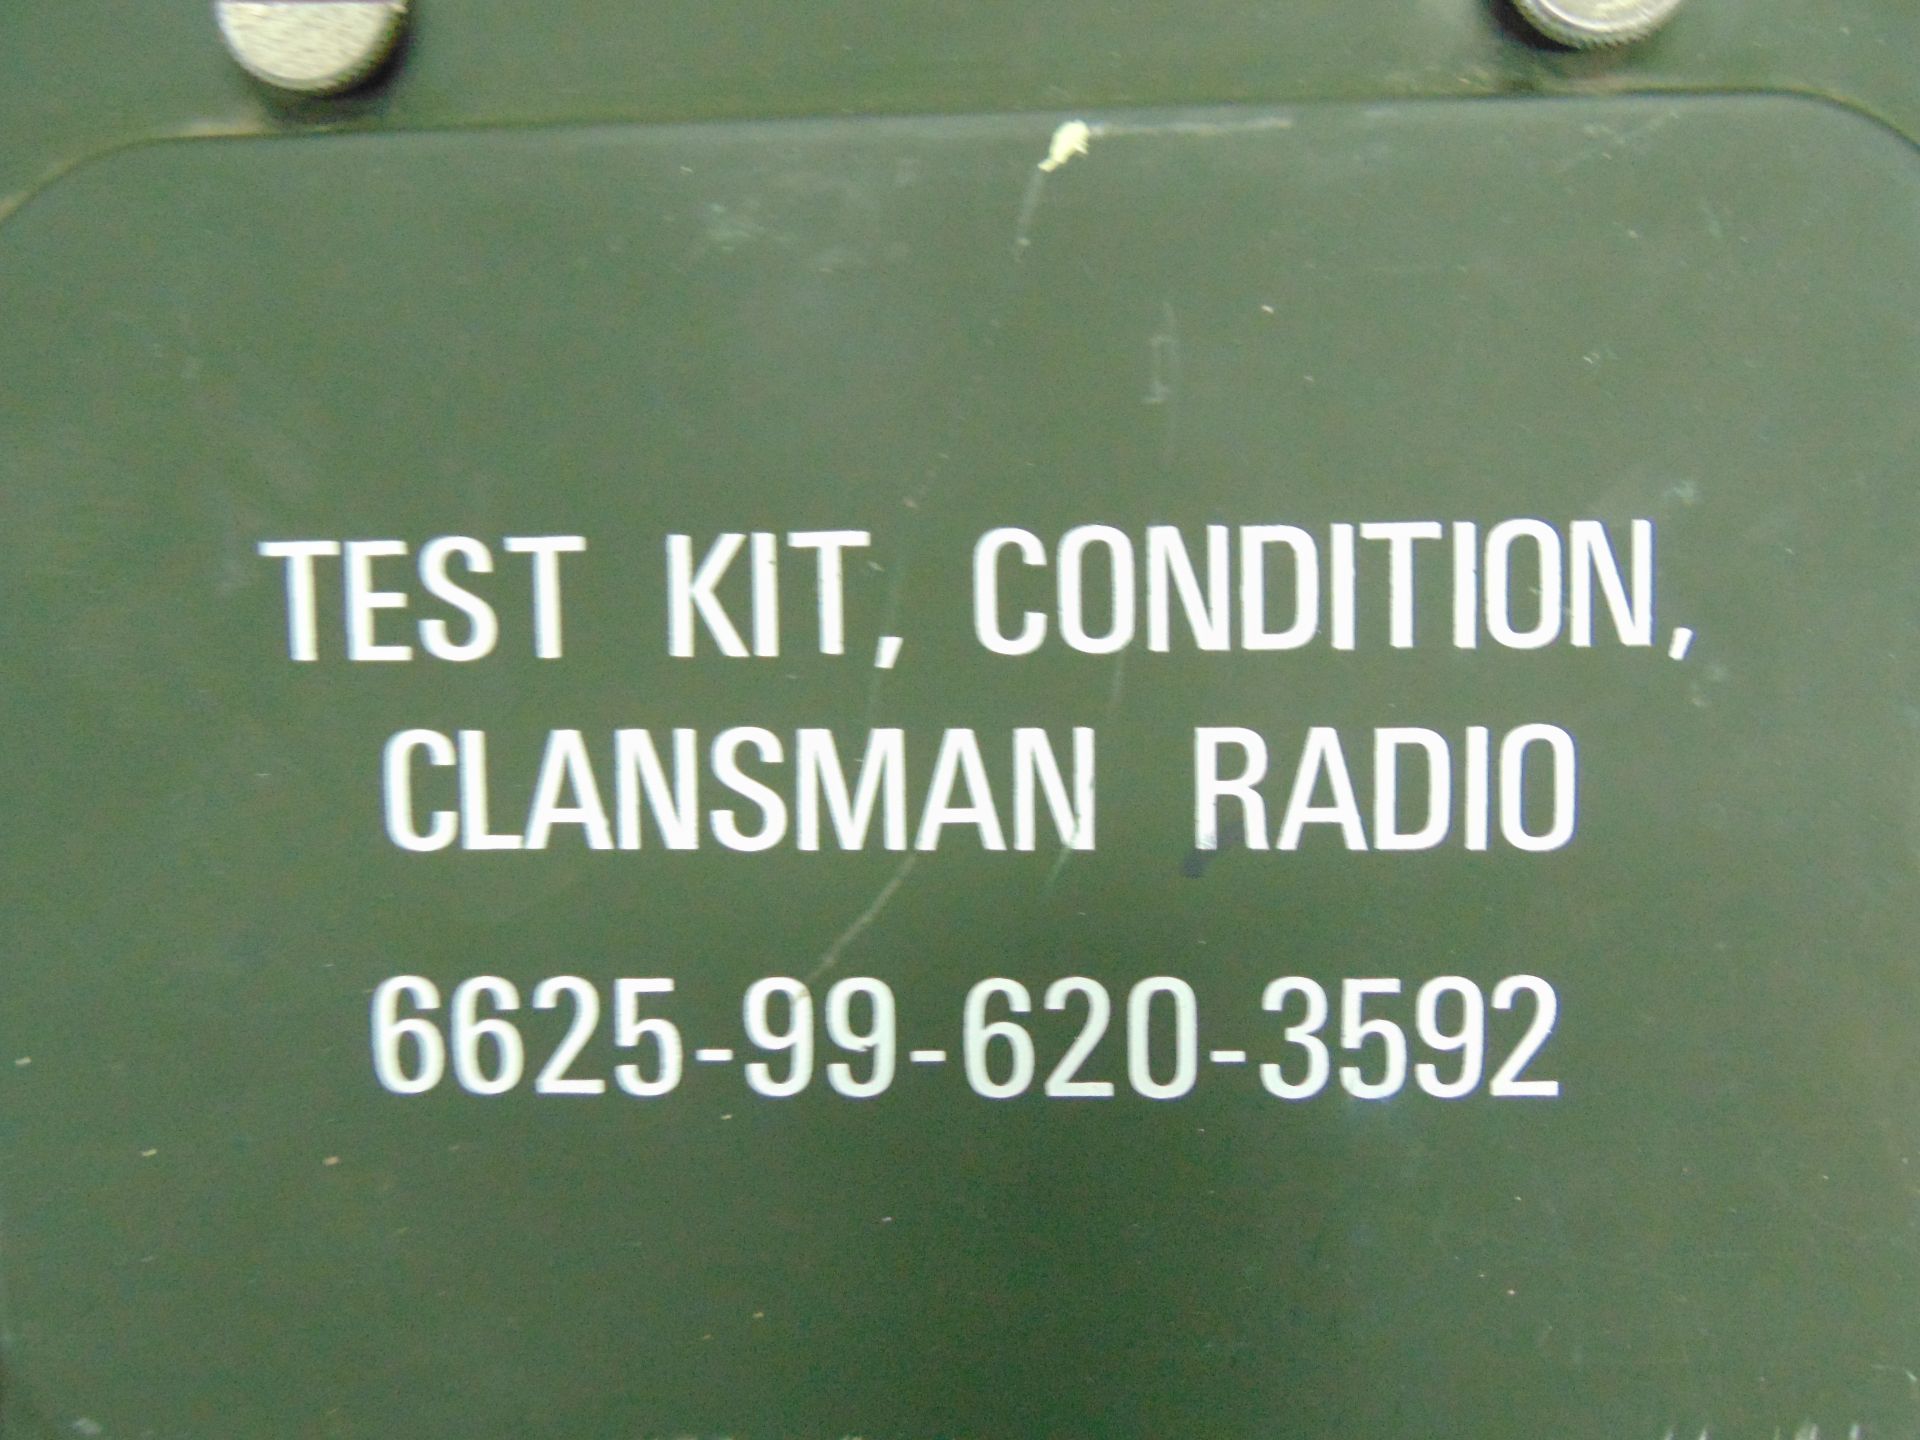 Clansman Radio Condition Test Kit - Image 5 of 5